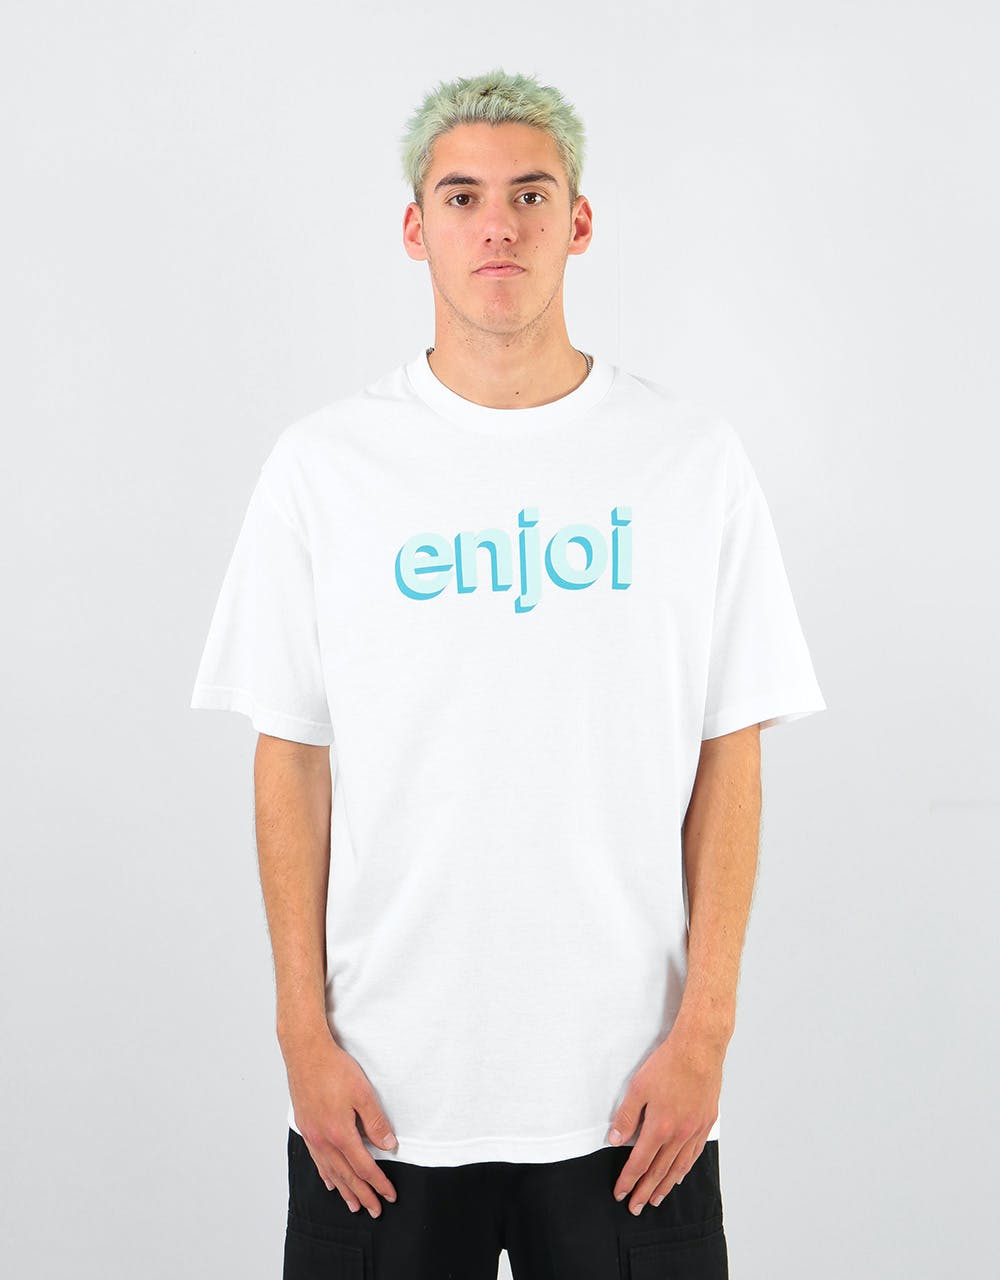 Enjoi Helvetica Neue T-Shirt - White